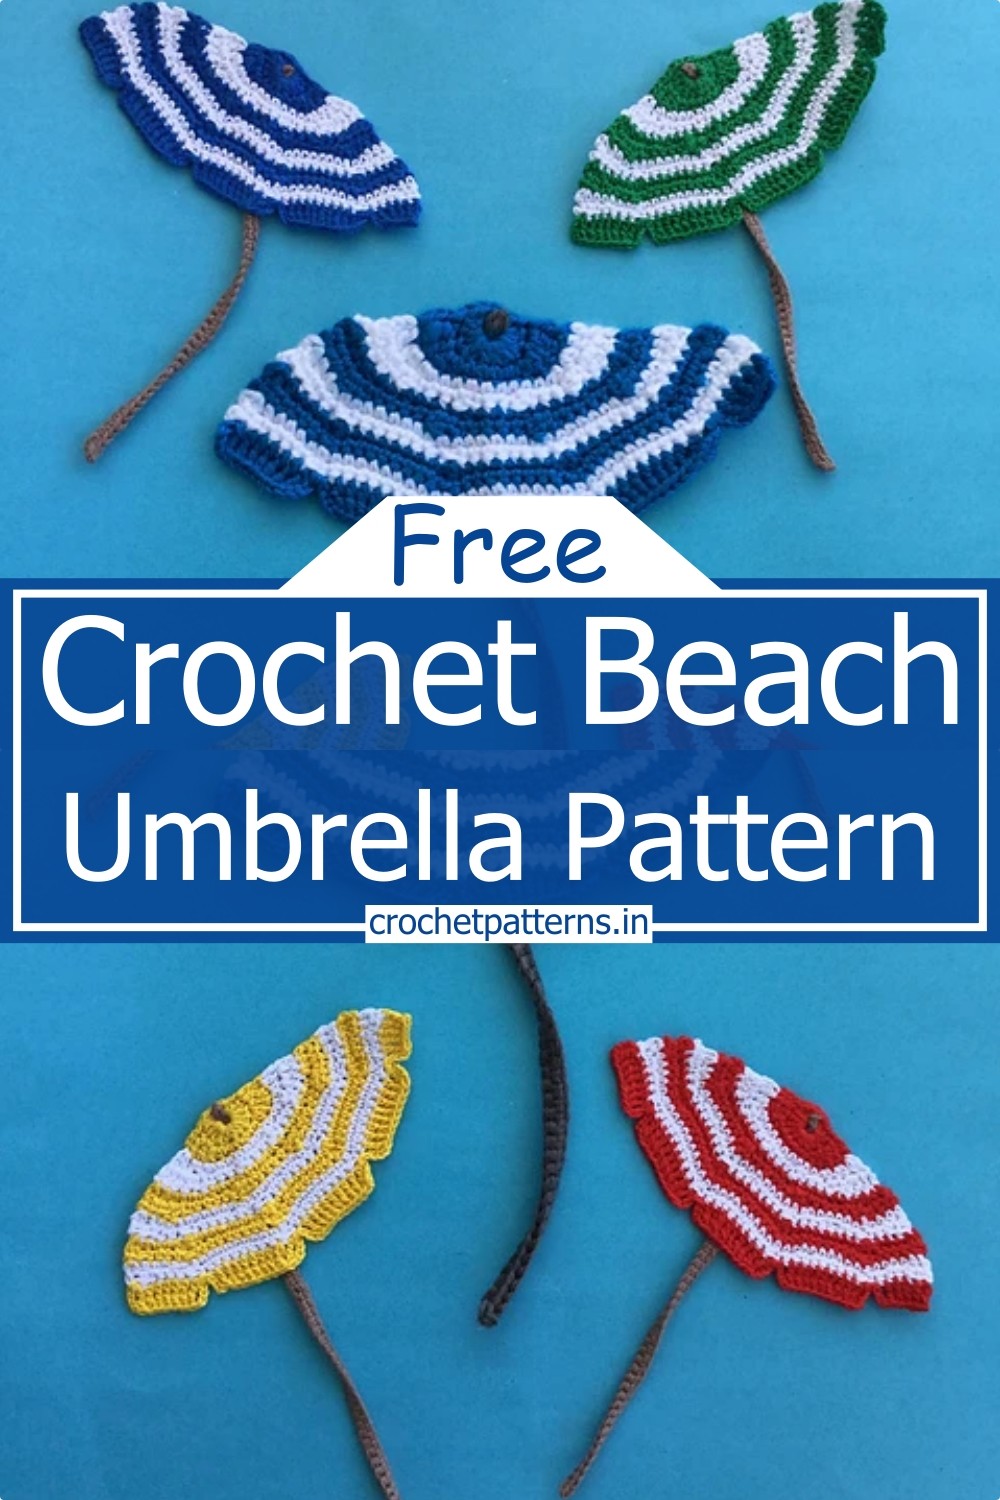 Crochet Beach Umbrella Pattern